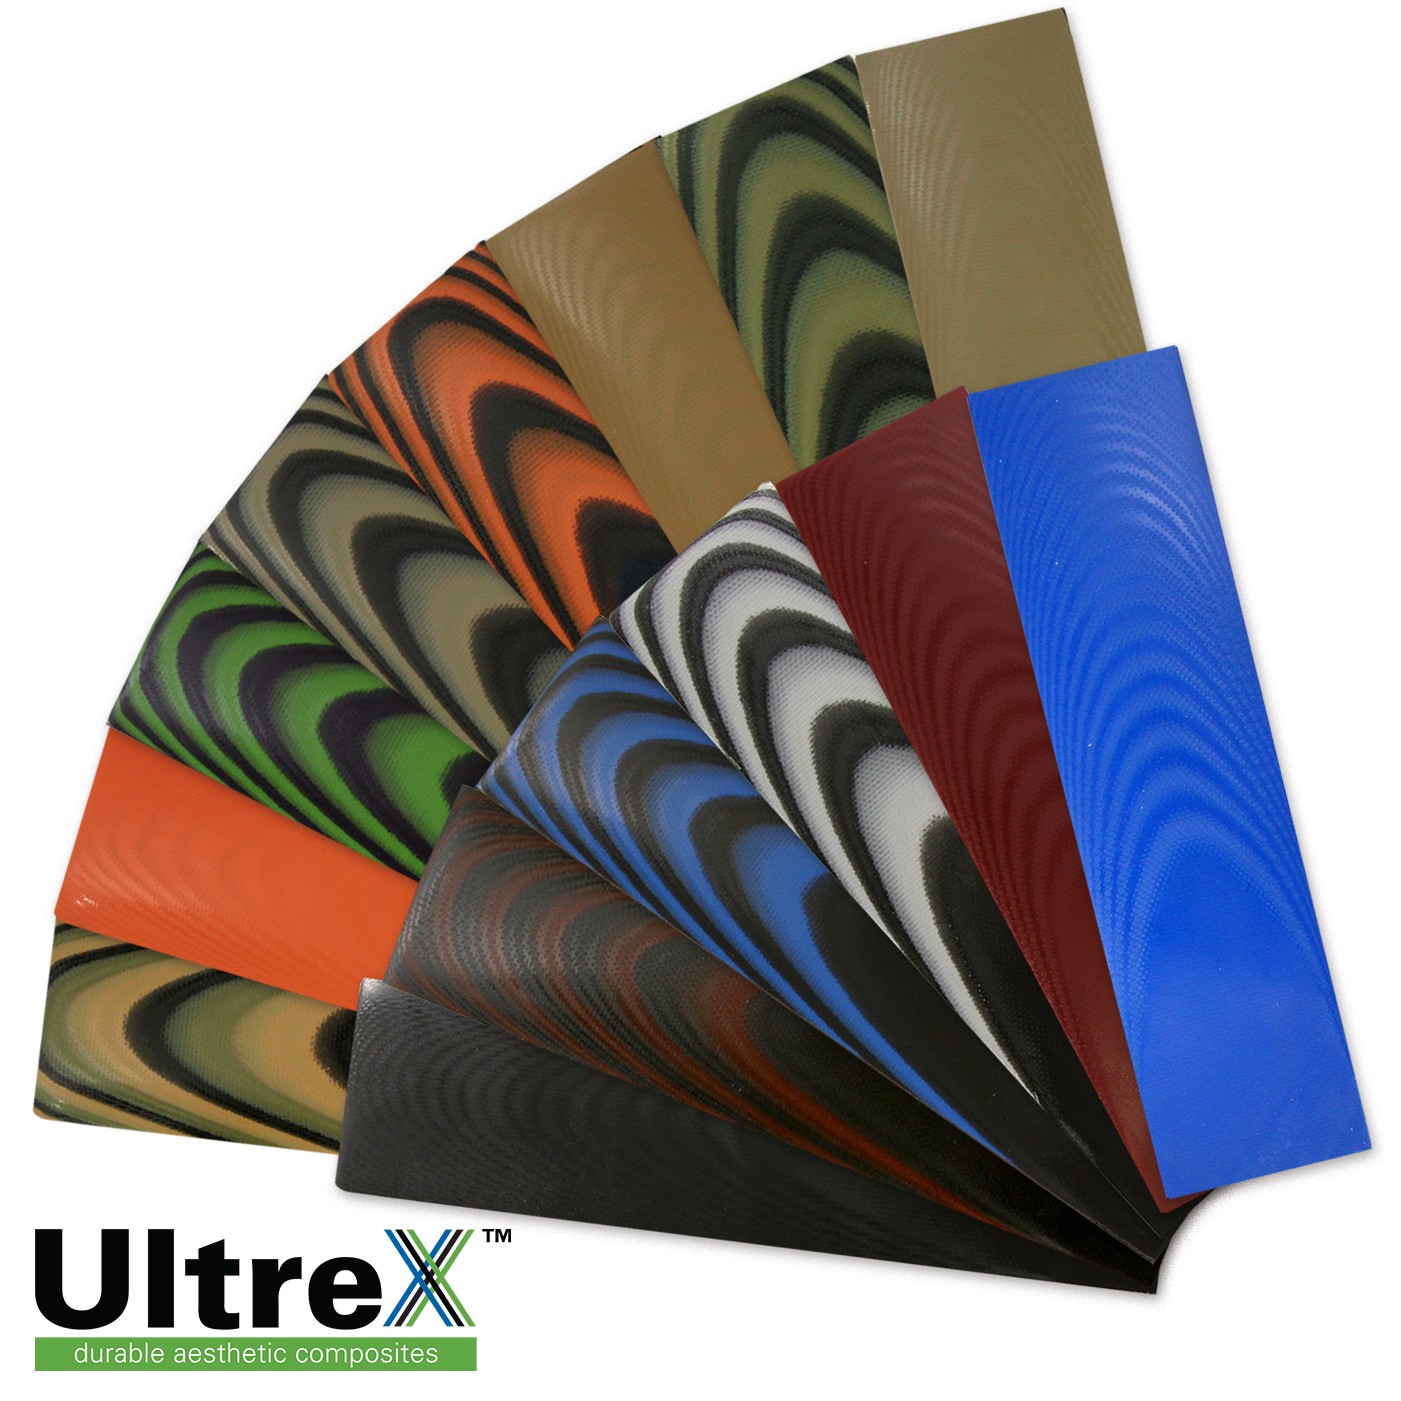 UltreX™ G10 by Norplex